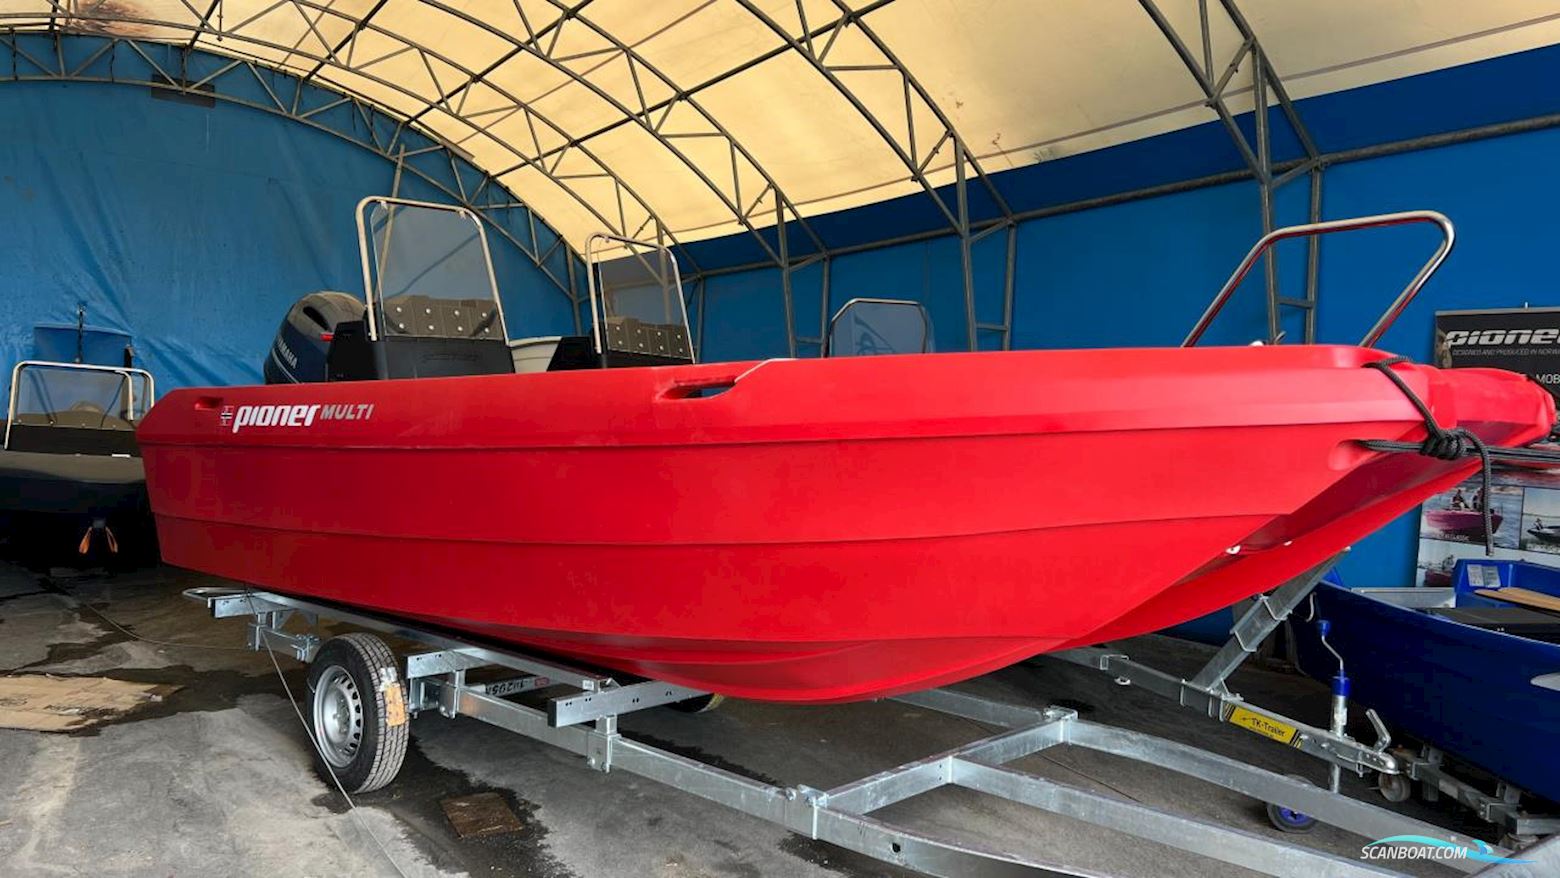 Pioner Multi Iii Motor boat 2023, with Yamaha engine, Sweden